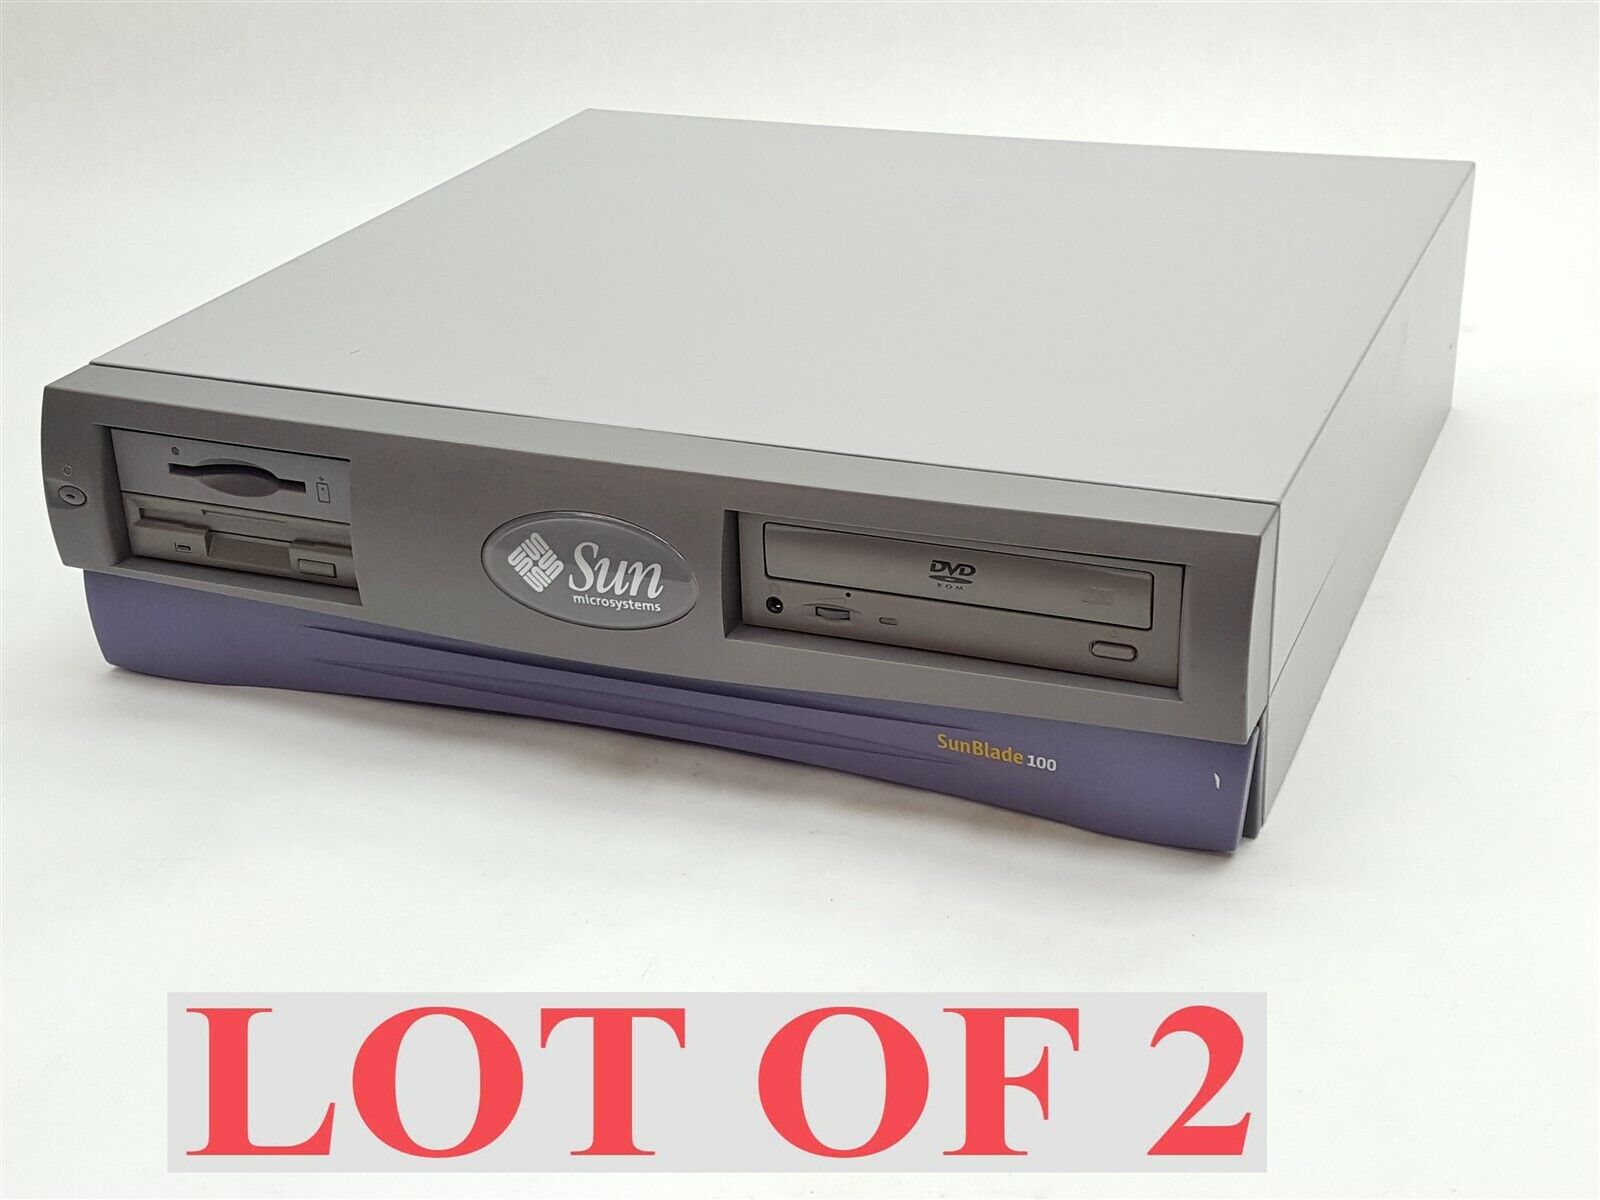 Sun Sunblade 100 Ultra Sparc IIe 500Mhz 512Mb NO HDD Desktop Computer Lot 2